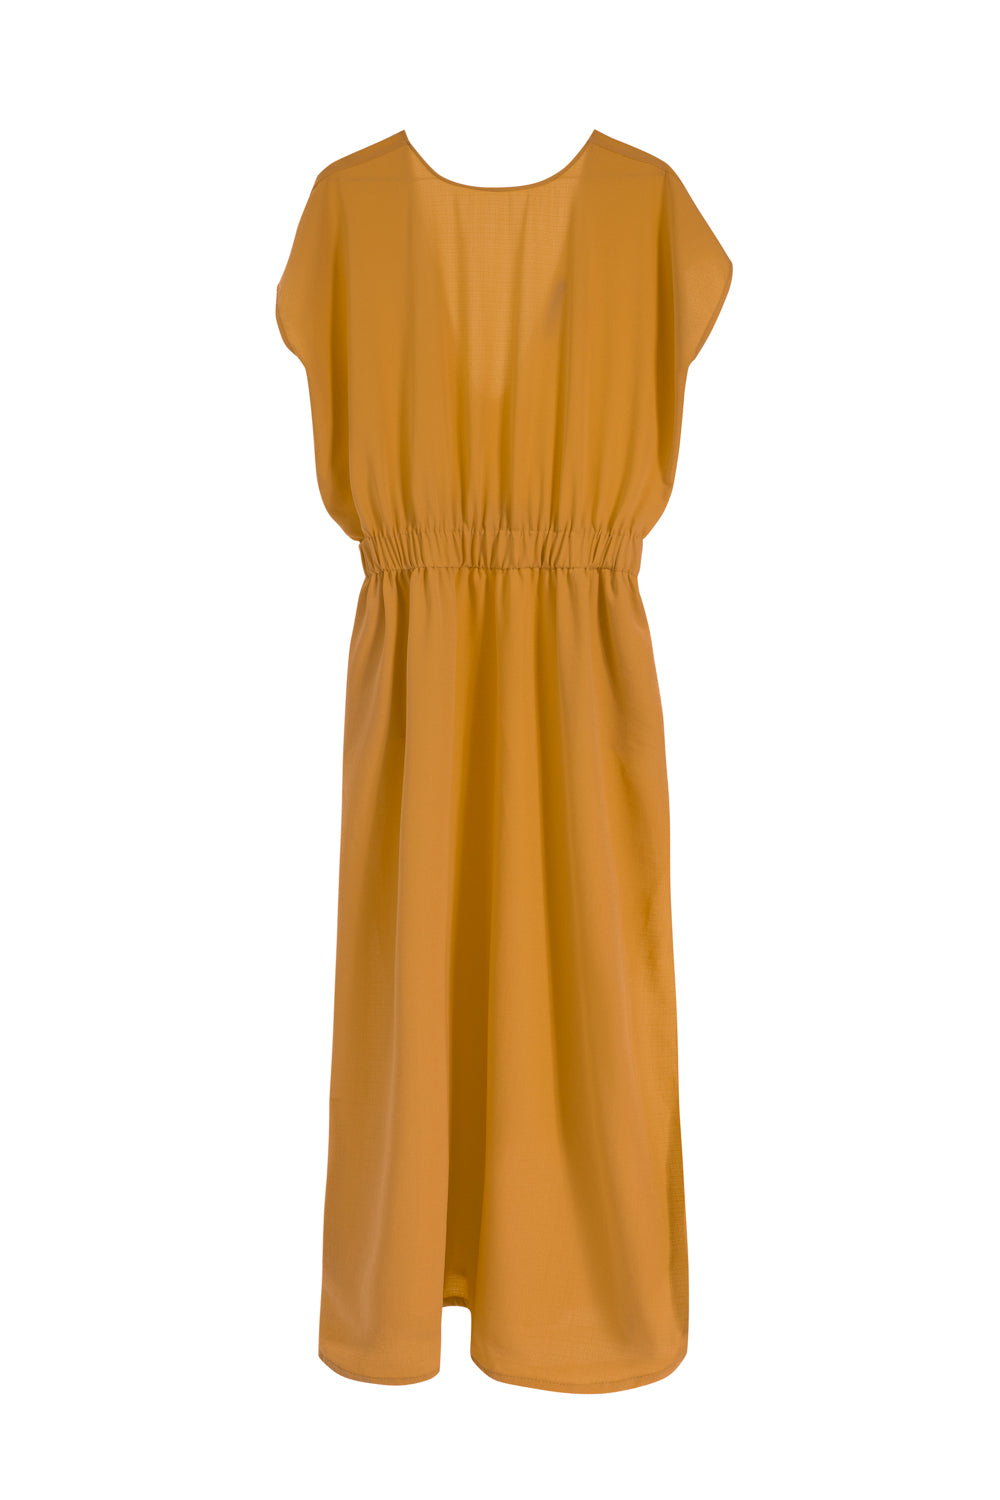 Marigold | dress